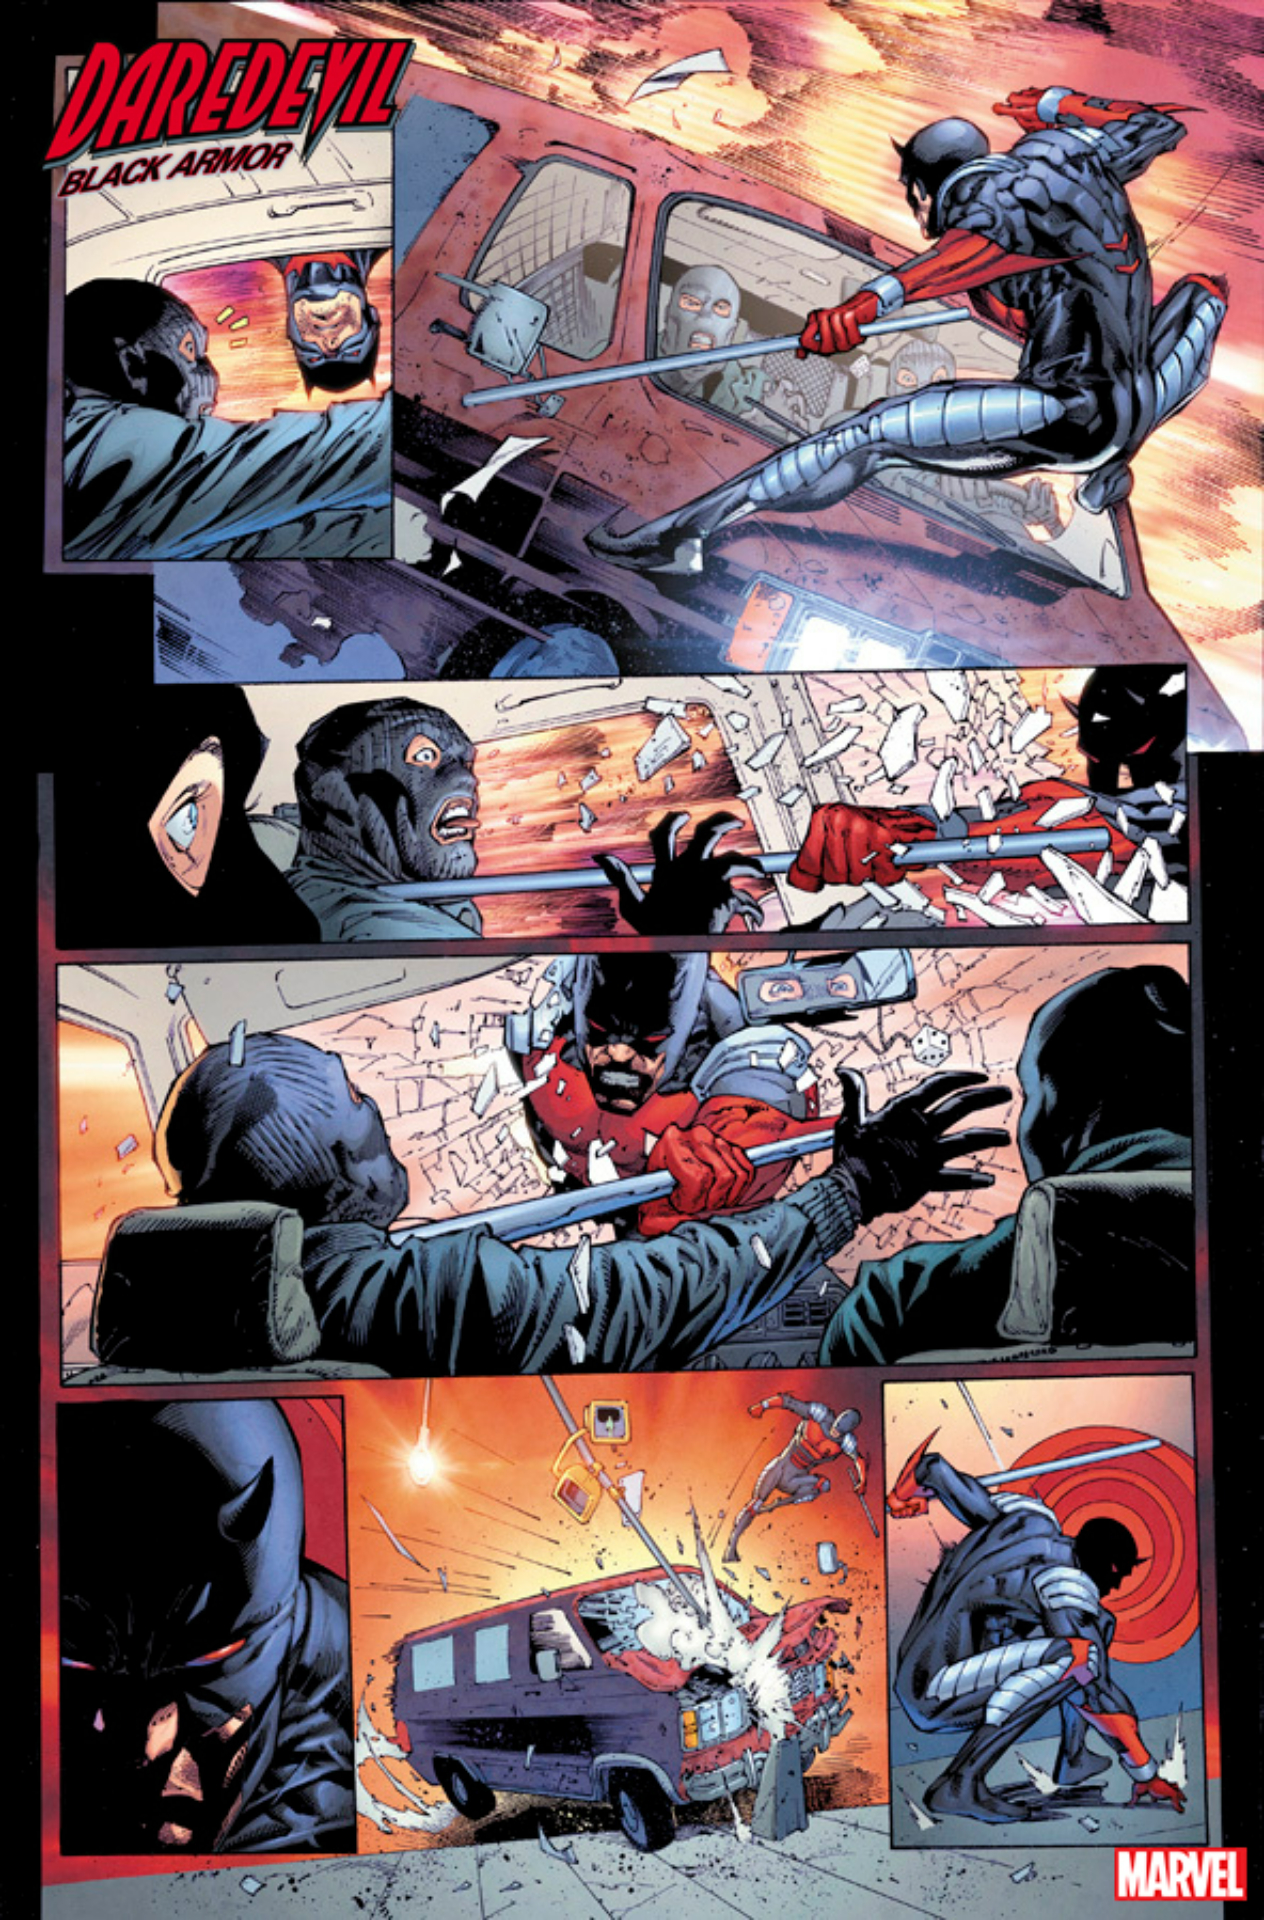 Daredevil: Black Armor #1 immagine interna